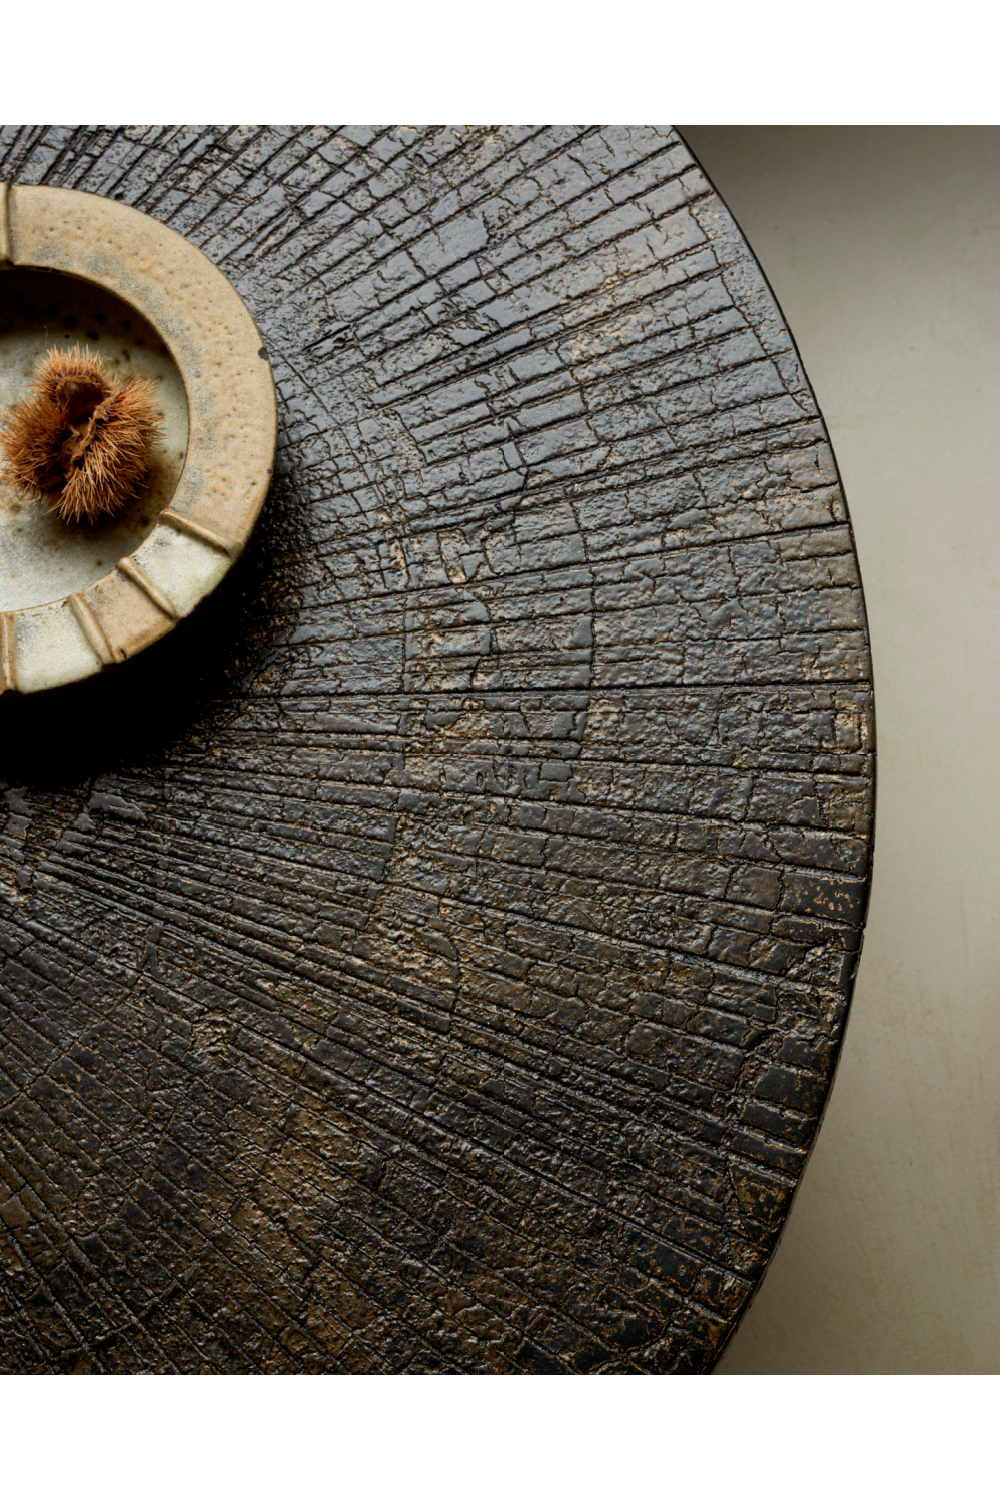 Metallic Oval Coffee Table | Ethnicraft Slice | Woodfurniture.com